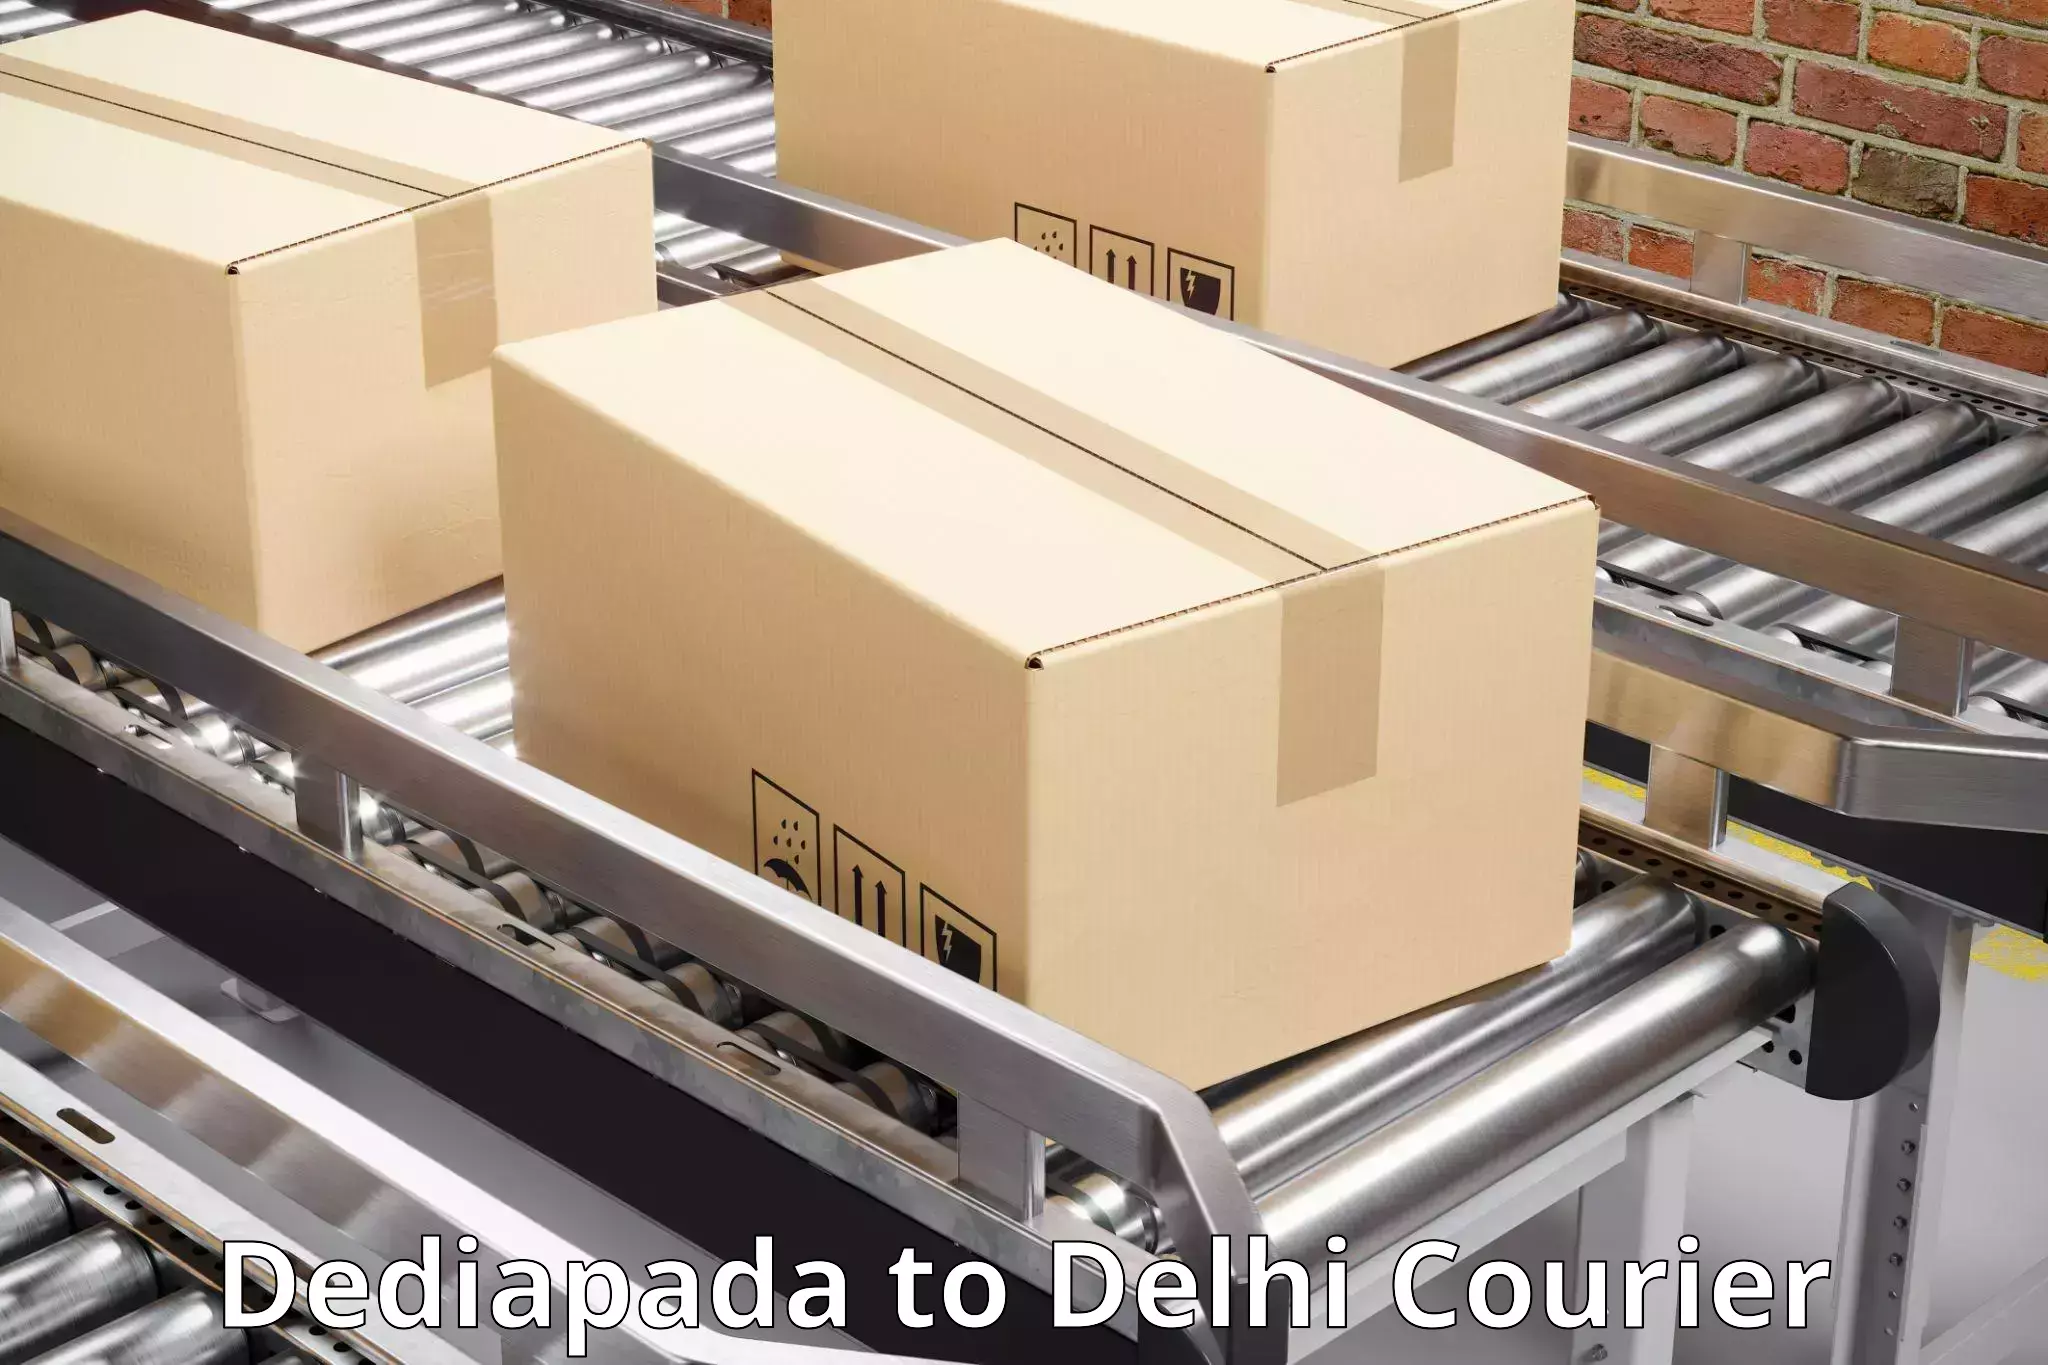 Flexible delivery schedules Dediapada to East Delhi